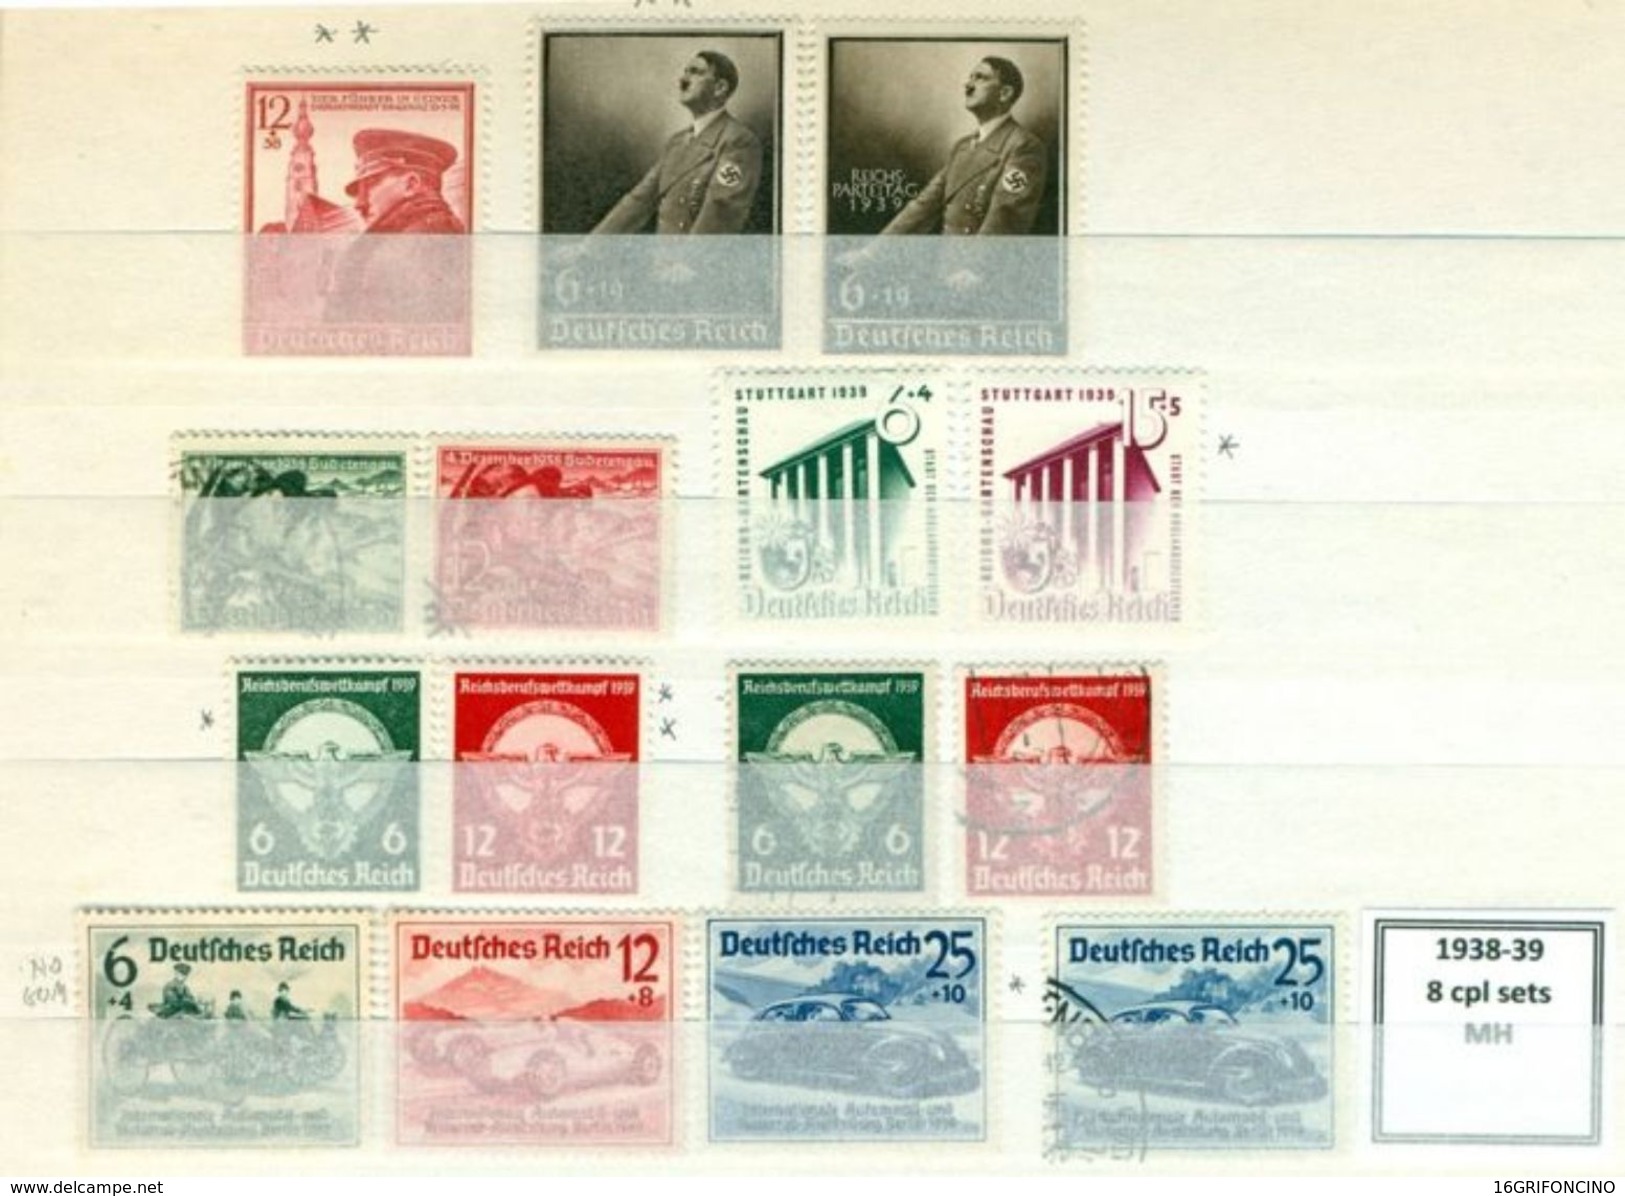 MANY POSTAGESTAMPS OF GERMANY FROM  1872 TO 1945...//...FRANCOBOLLI DELLA GERMANIA  DAL 1872 AL 1945...NUOVI ED USATI